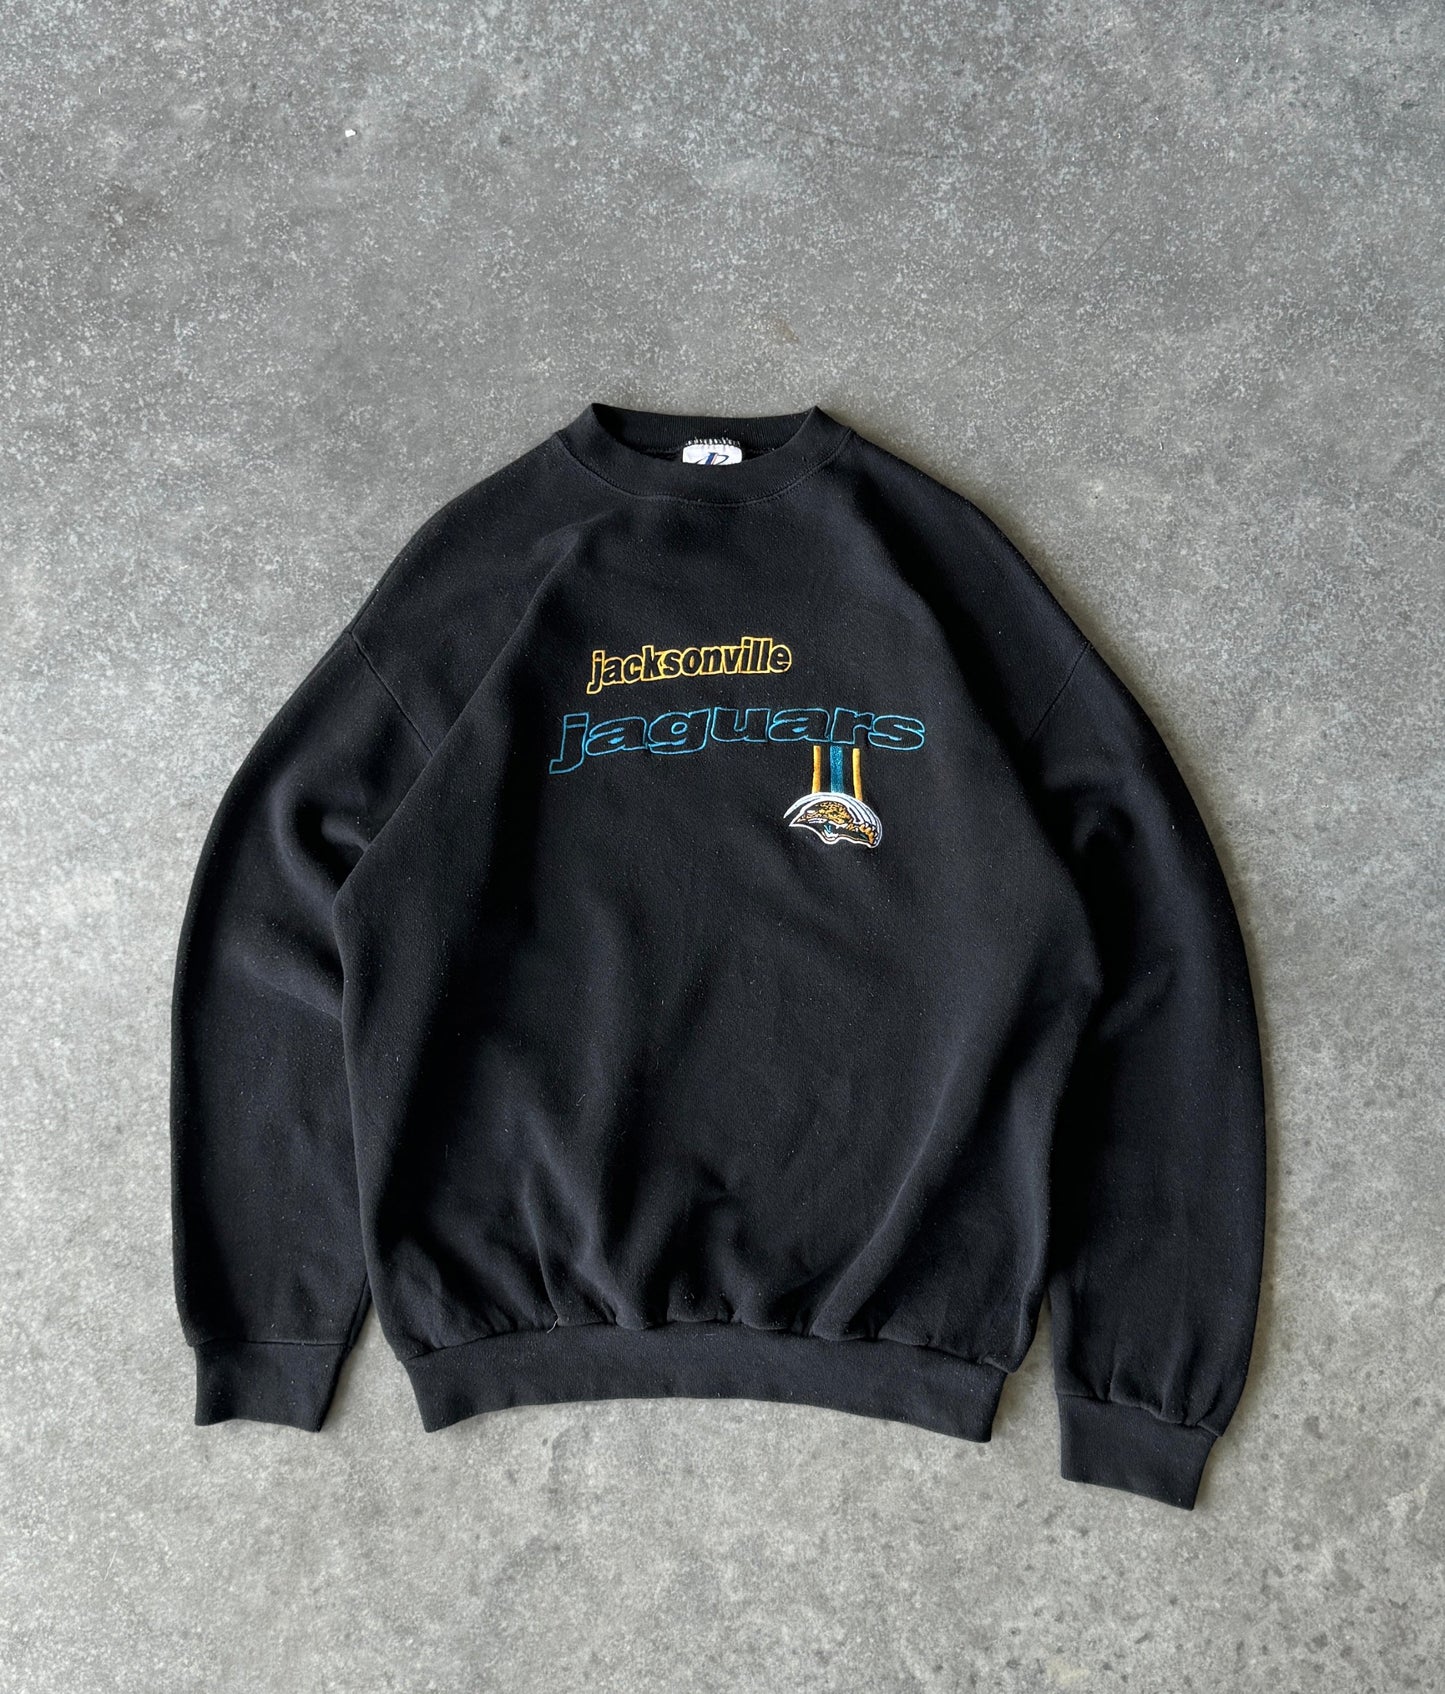 Vintage Jacksonville Jaguars Embroidered Sweater (L)